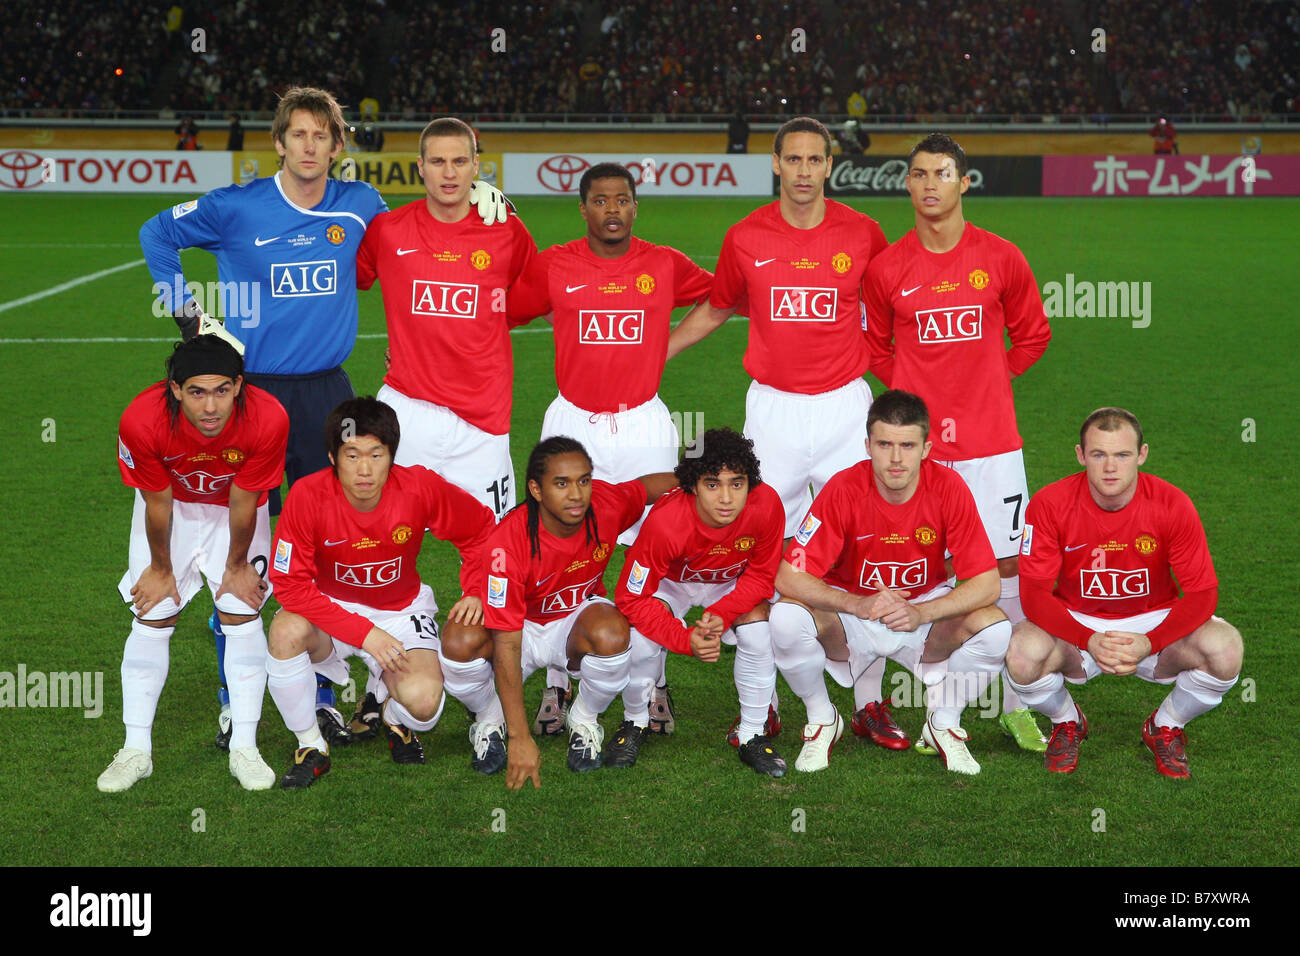 Man u squad 2008